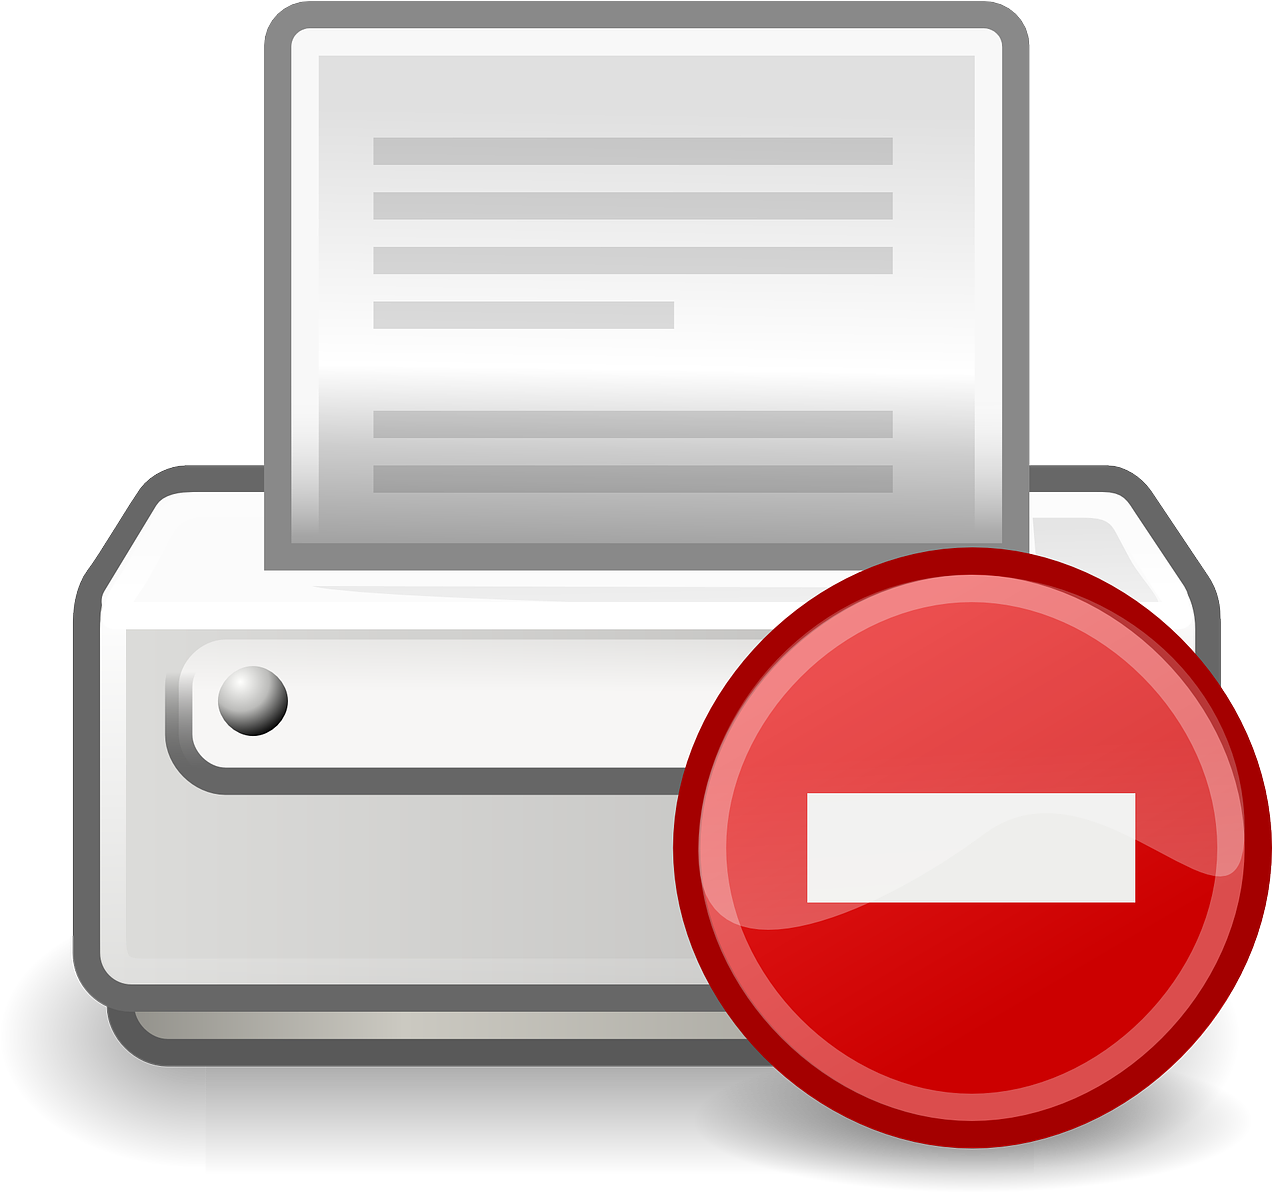 Printer Error Icon PNG image